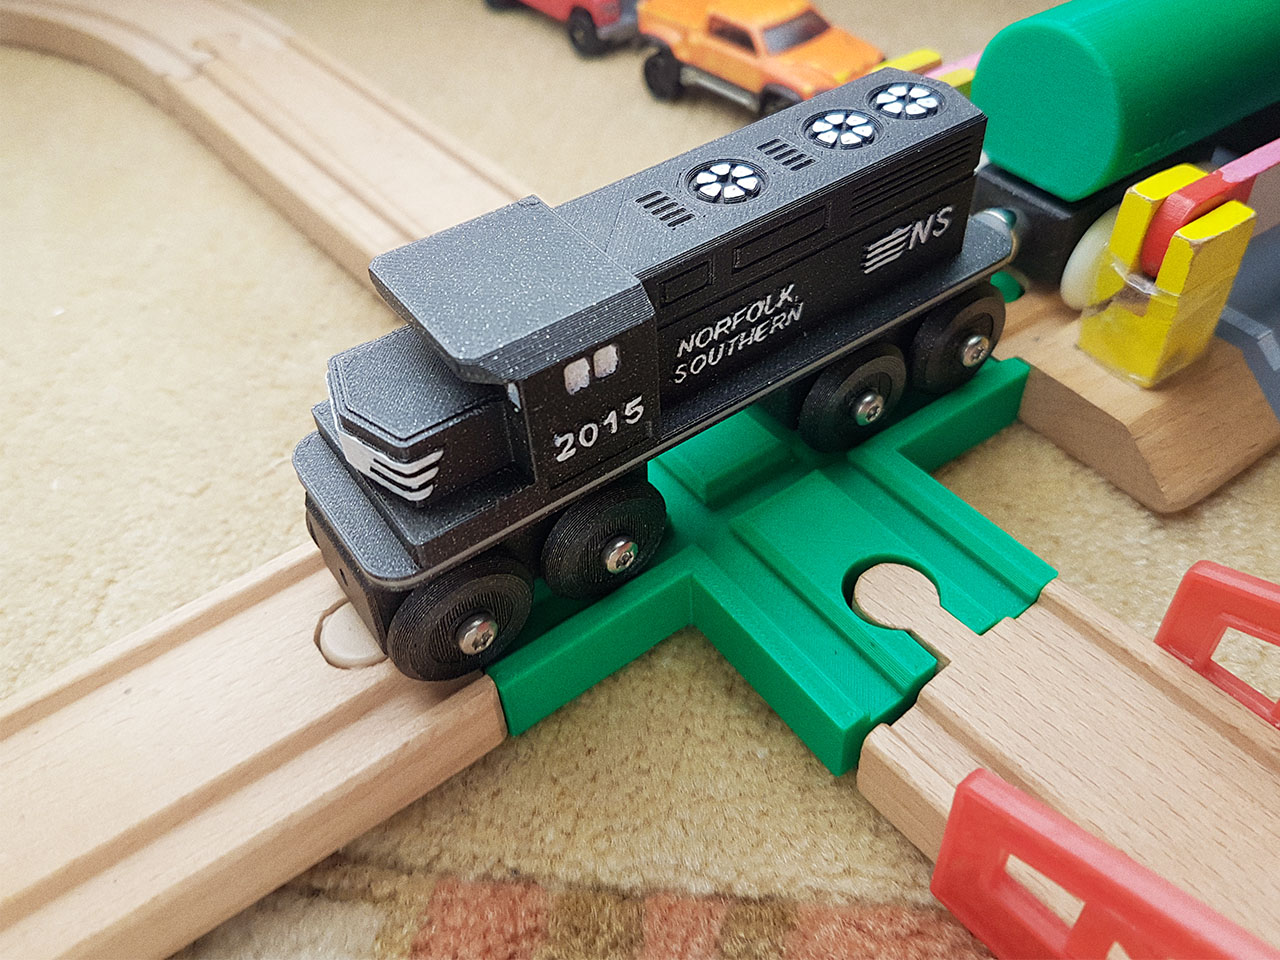 Norfolk Southern toy train (BRIO / IKEA compatible)